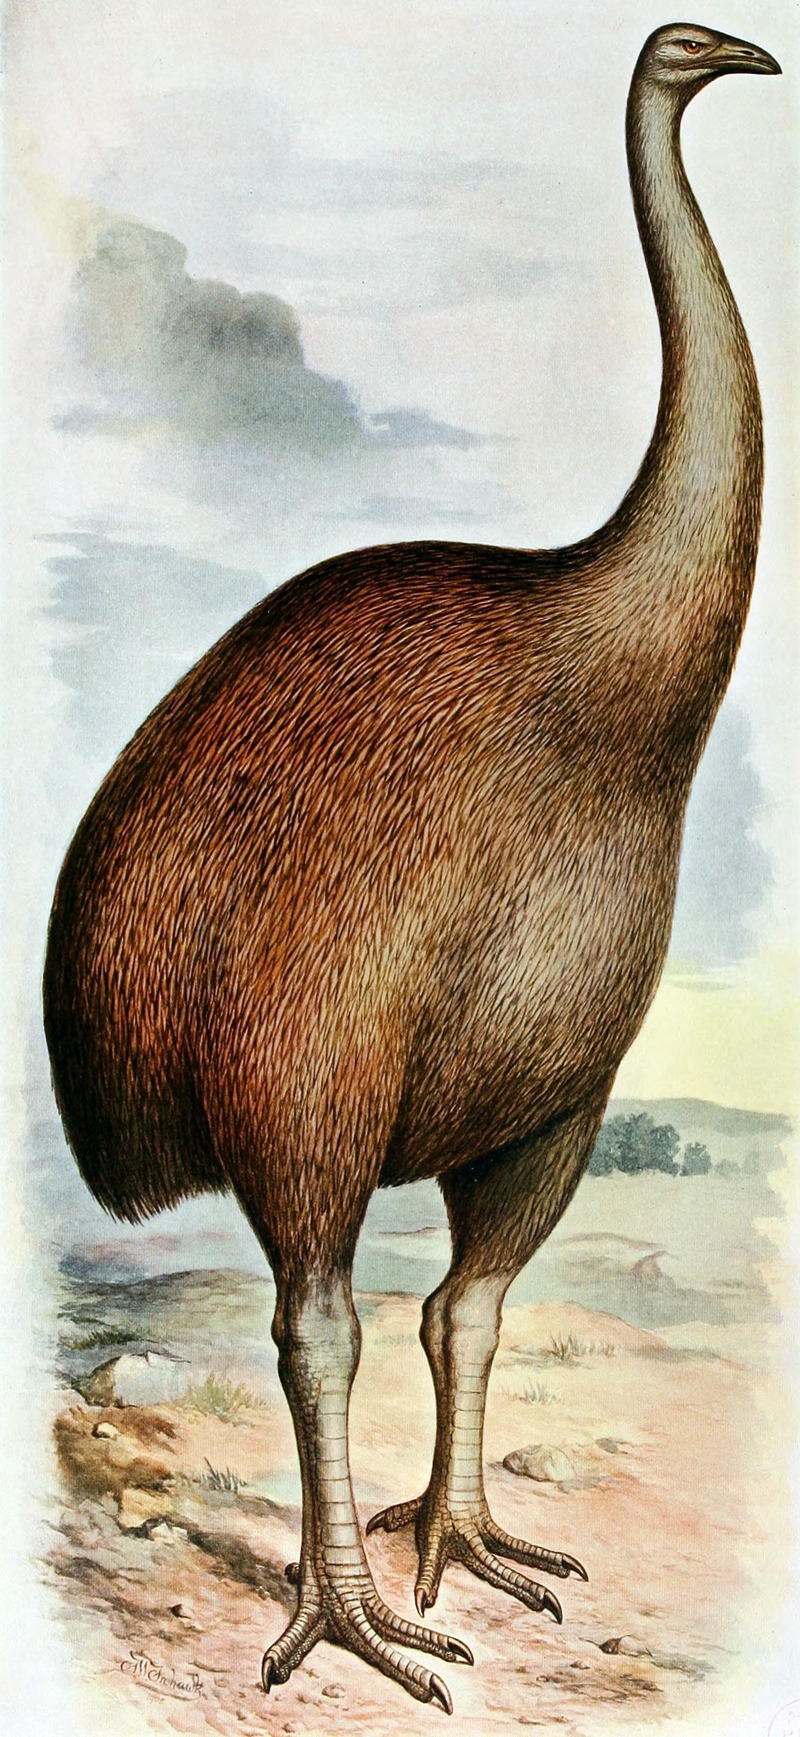 North Island giant moa (Dinornis novaezealandiae); DISPLAY FULL IMAGE.